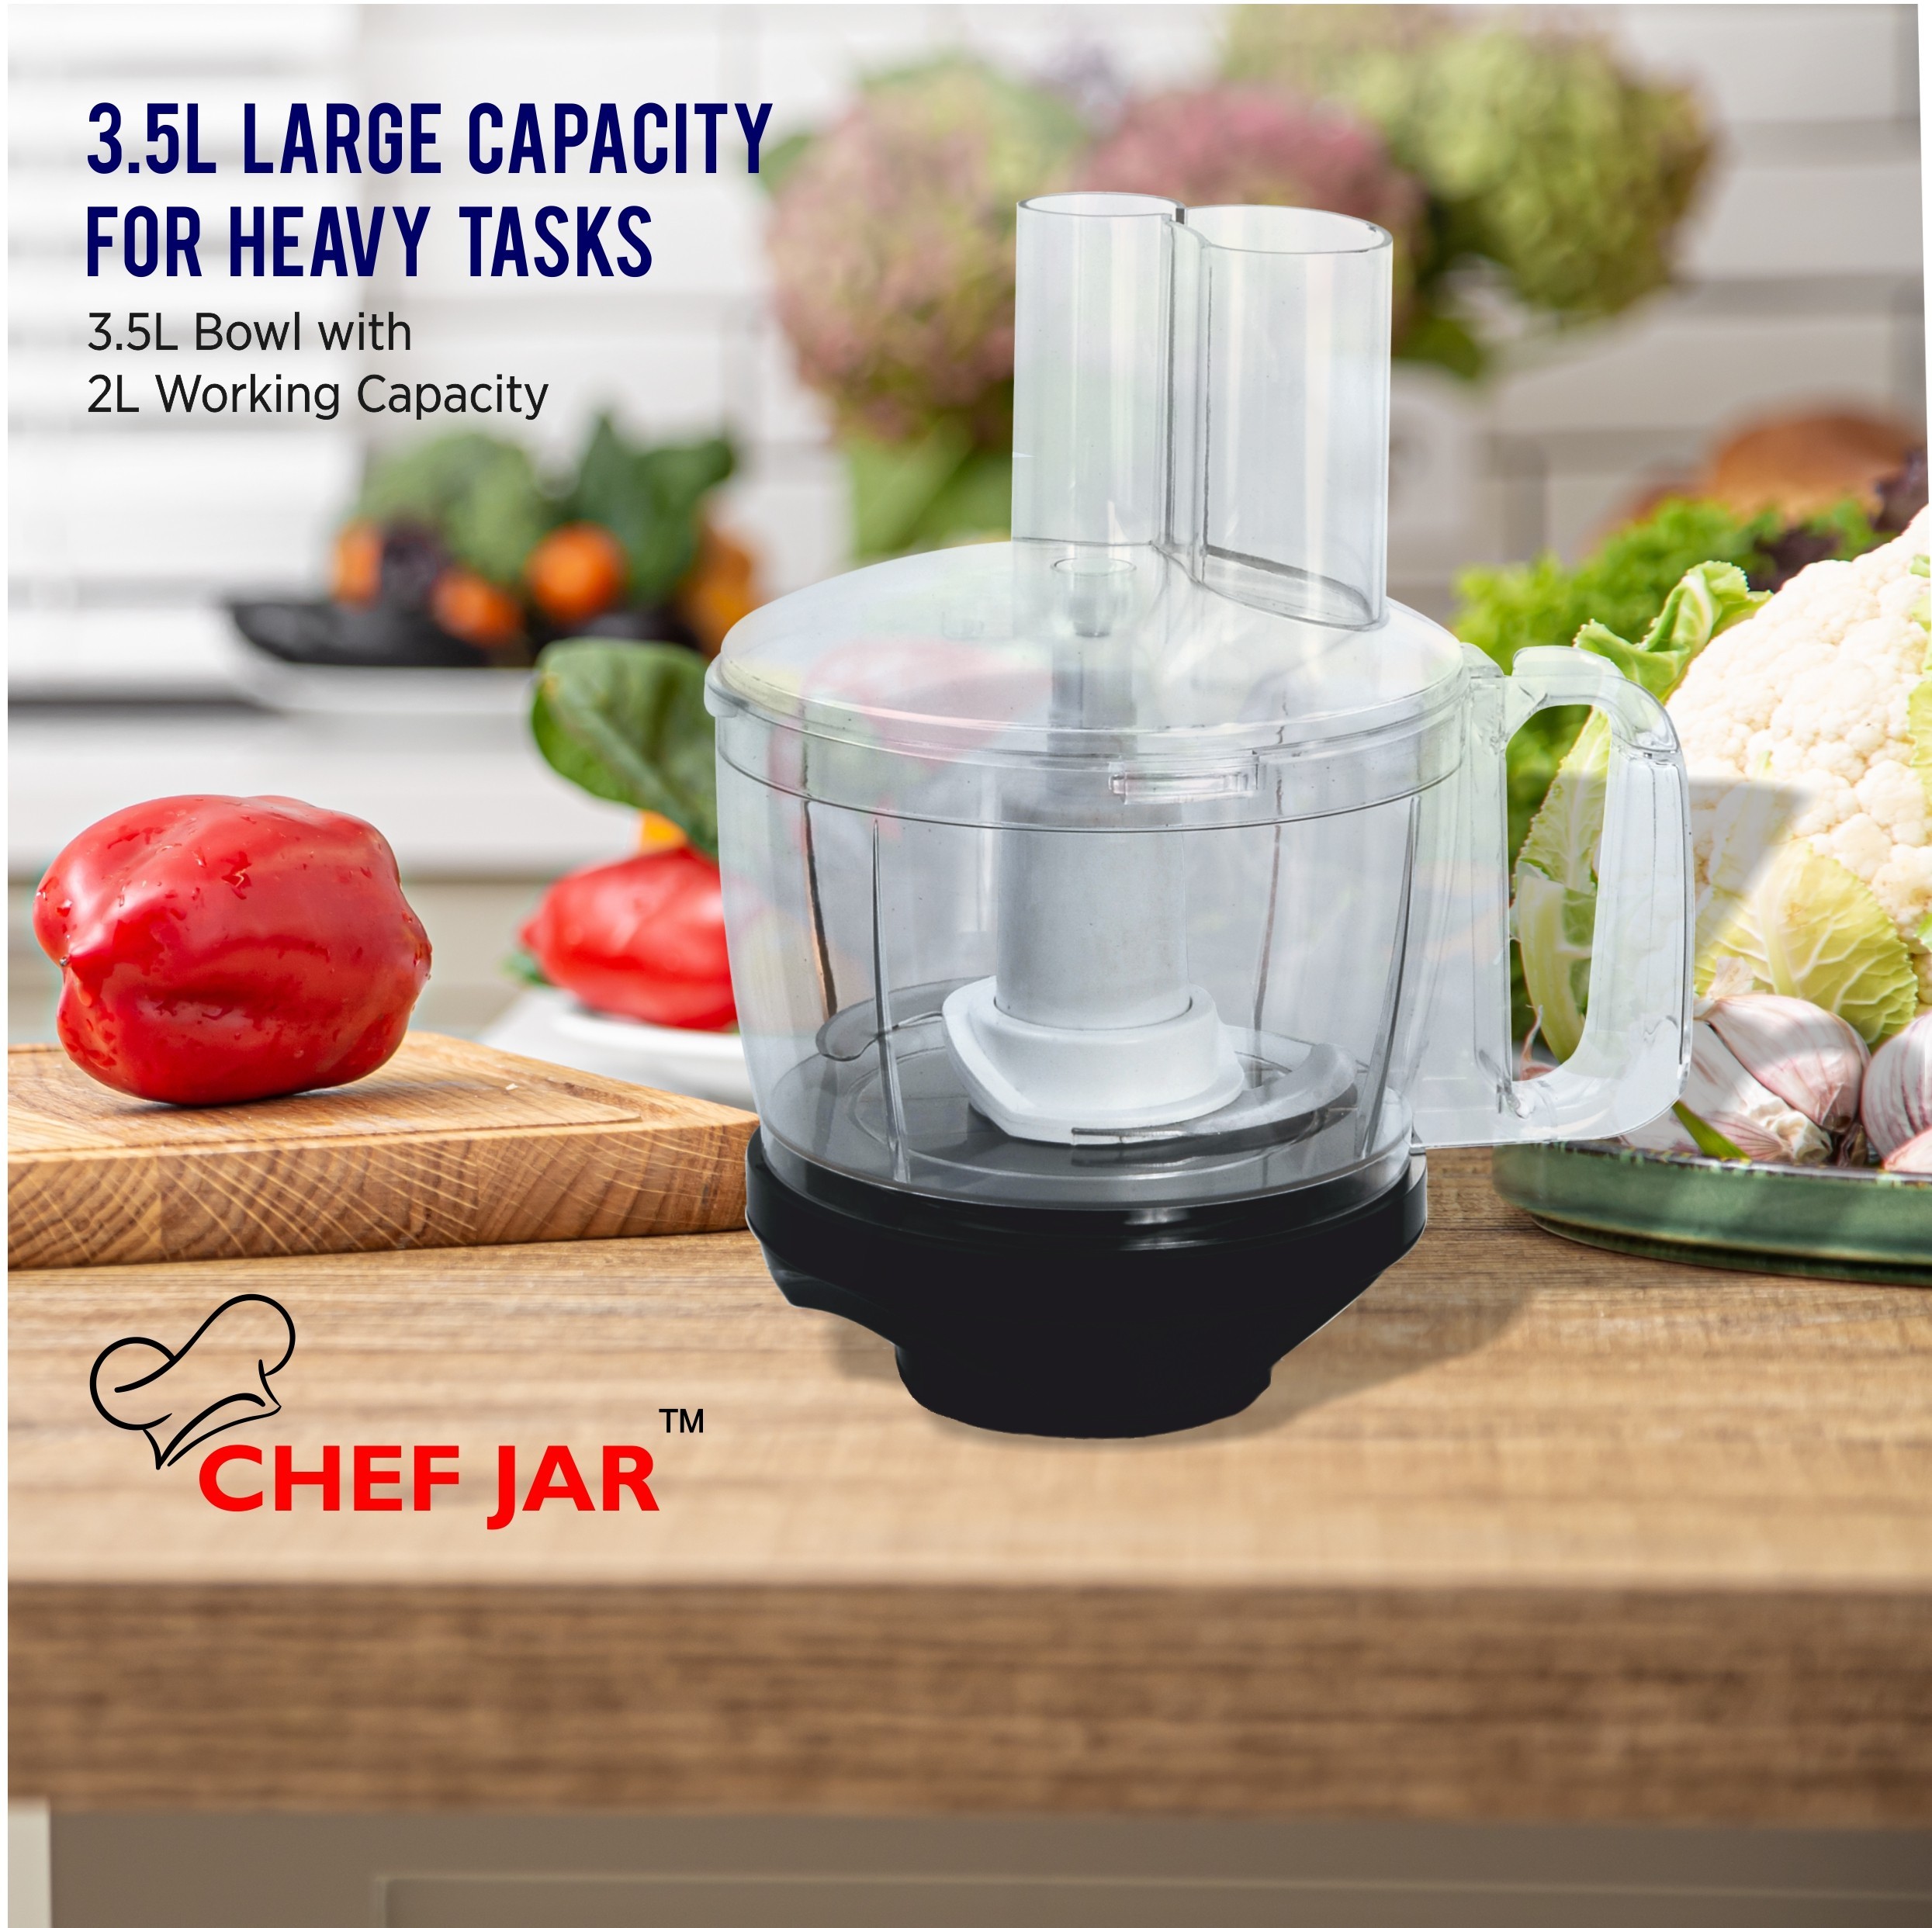 vidiem-eva-nero-plus-650v-3-jars-with-chef-jar-juicer3